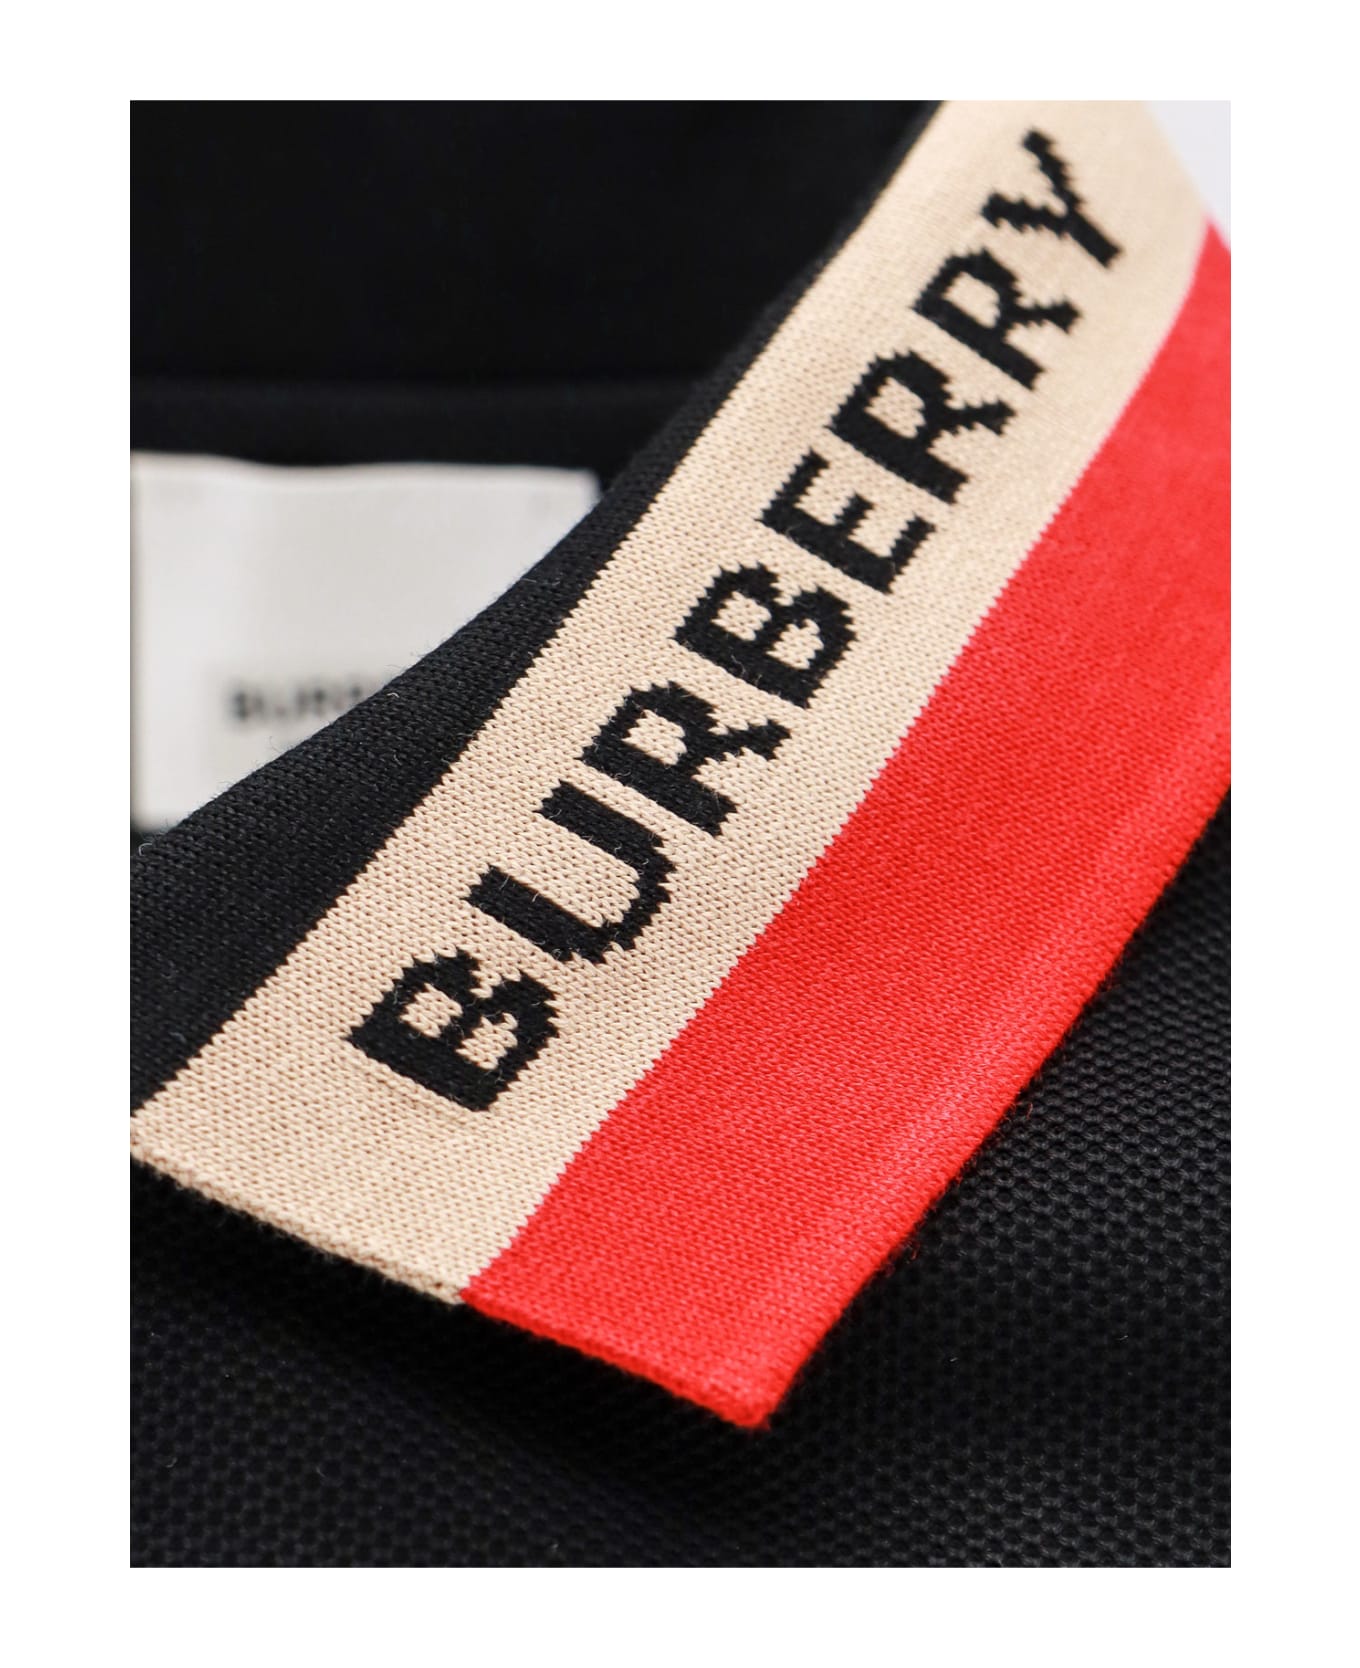 Burberry Polo Shirt - BLACK ポロシャツ